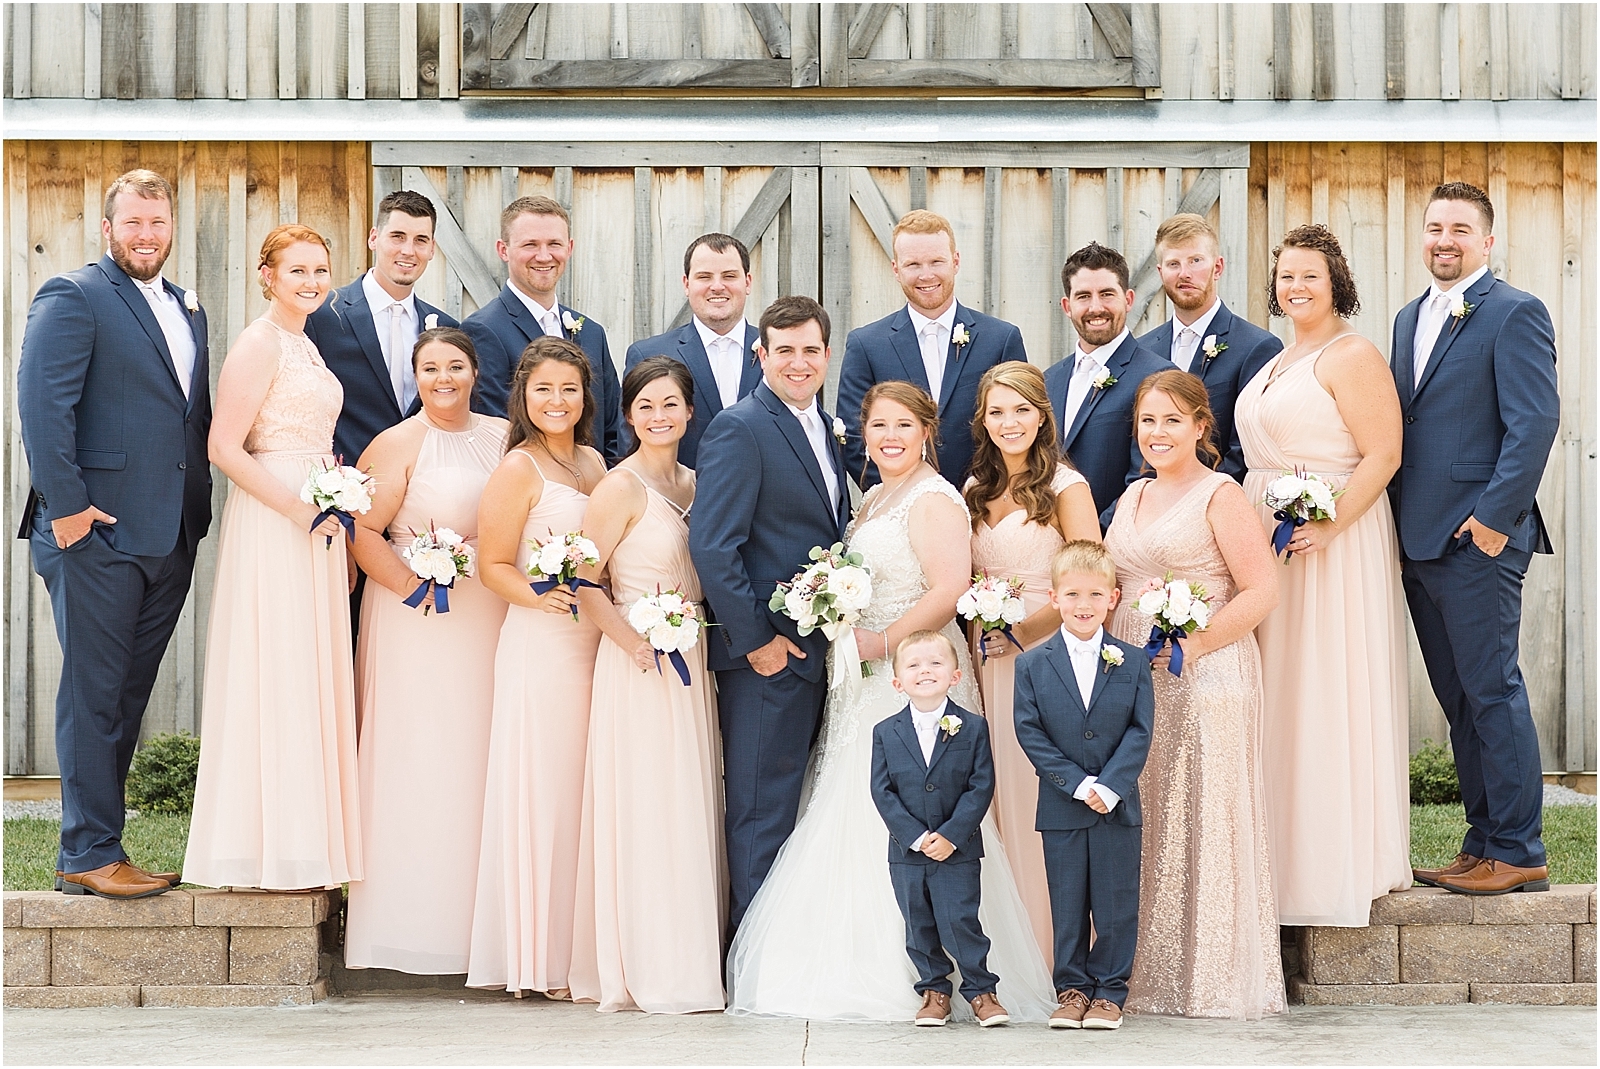 Rachel and Michael | Bret and Brandie Photography | Evansville Wedding Photographers 0055.jpg